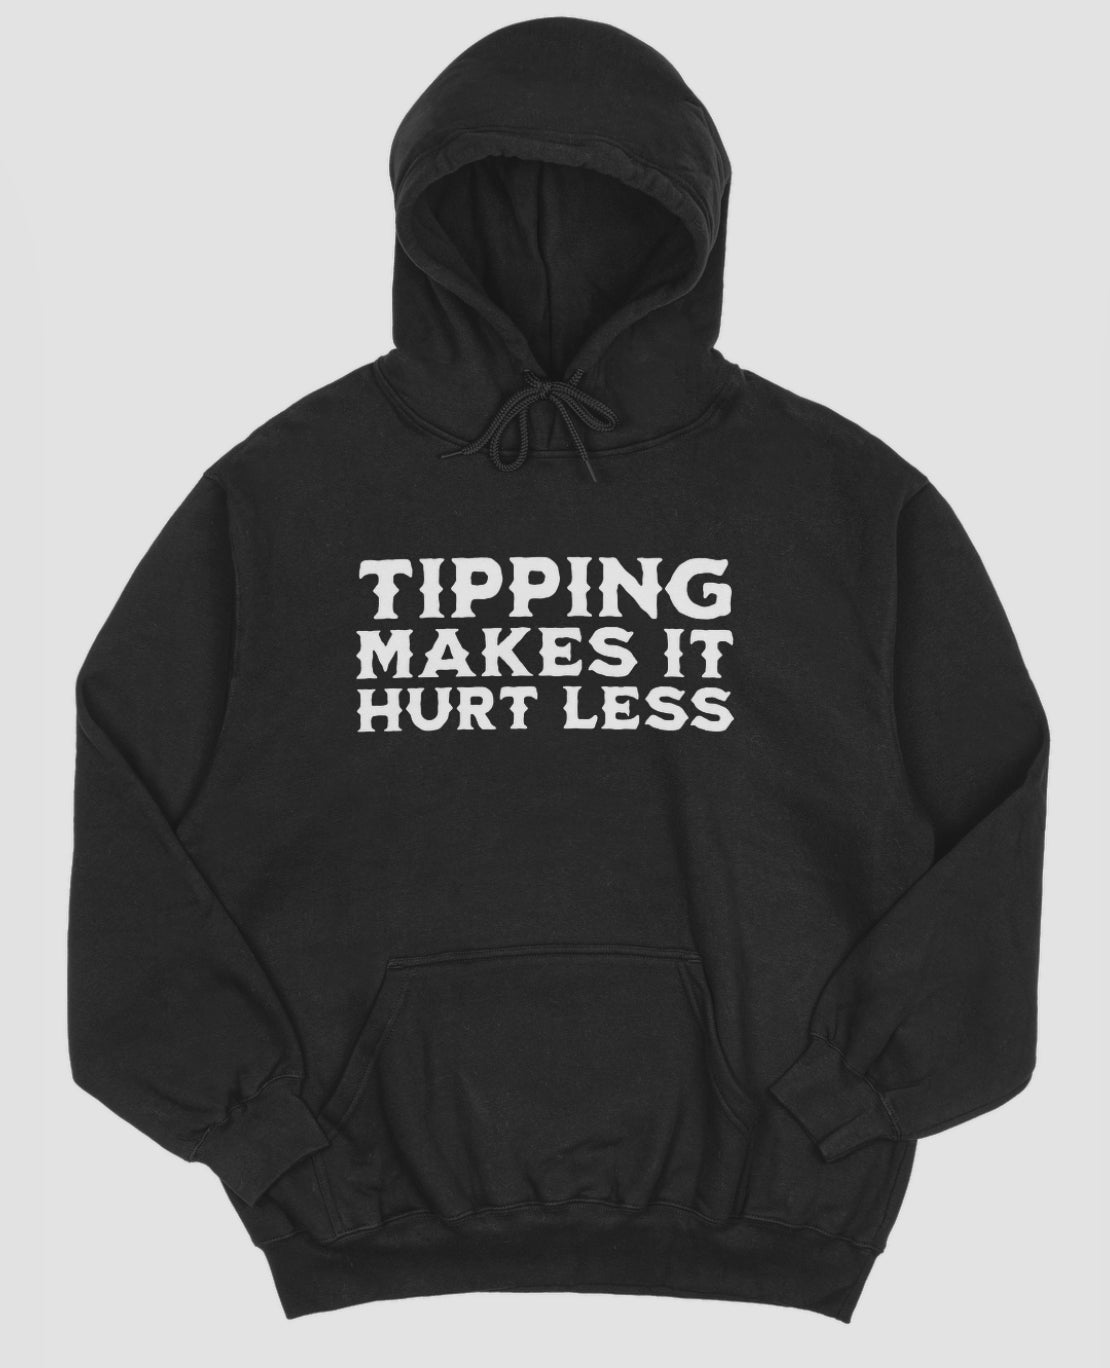 “Tipping Makes It Hurt Less” Shirt